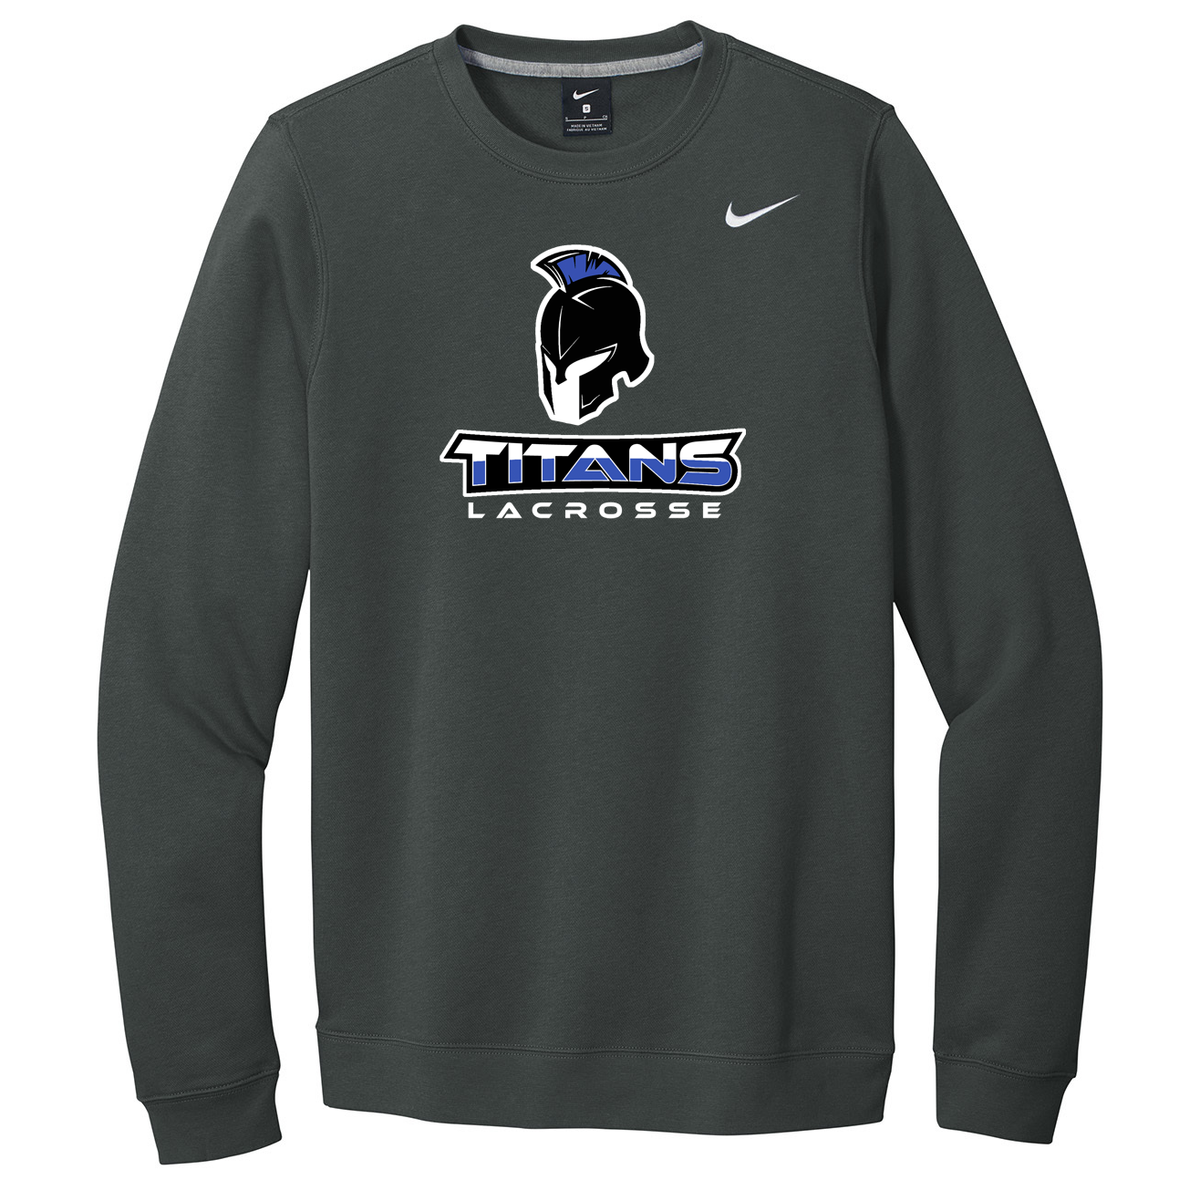 Southwest Titans Lacrosse Nike Fleece Crew Neck